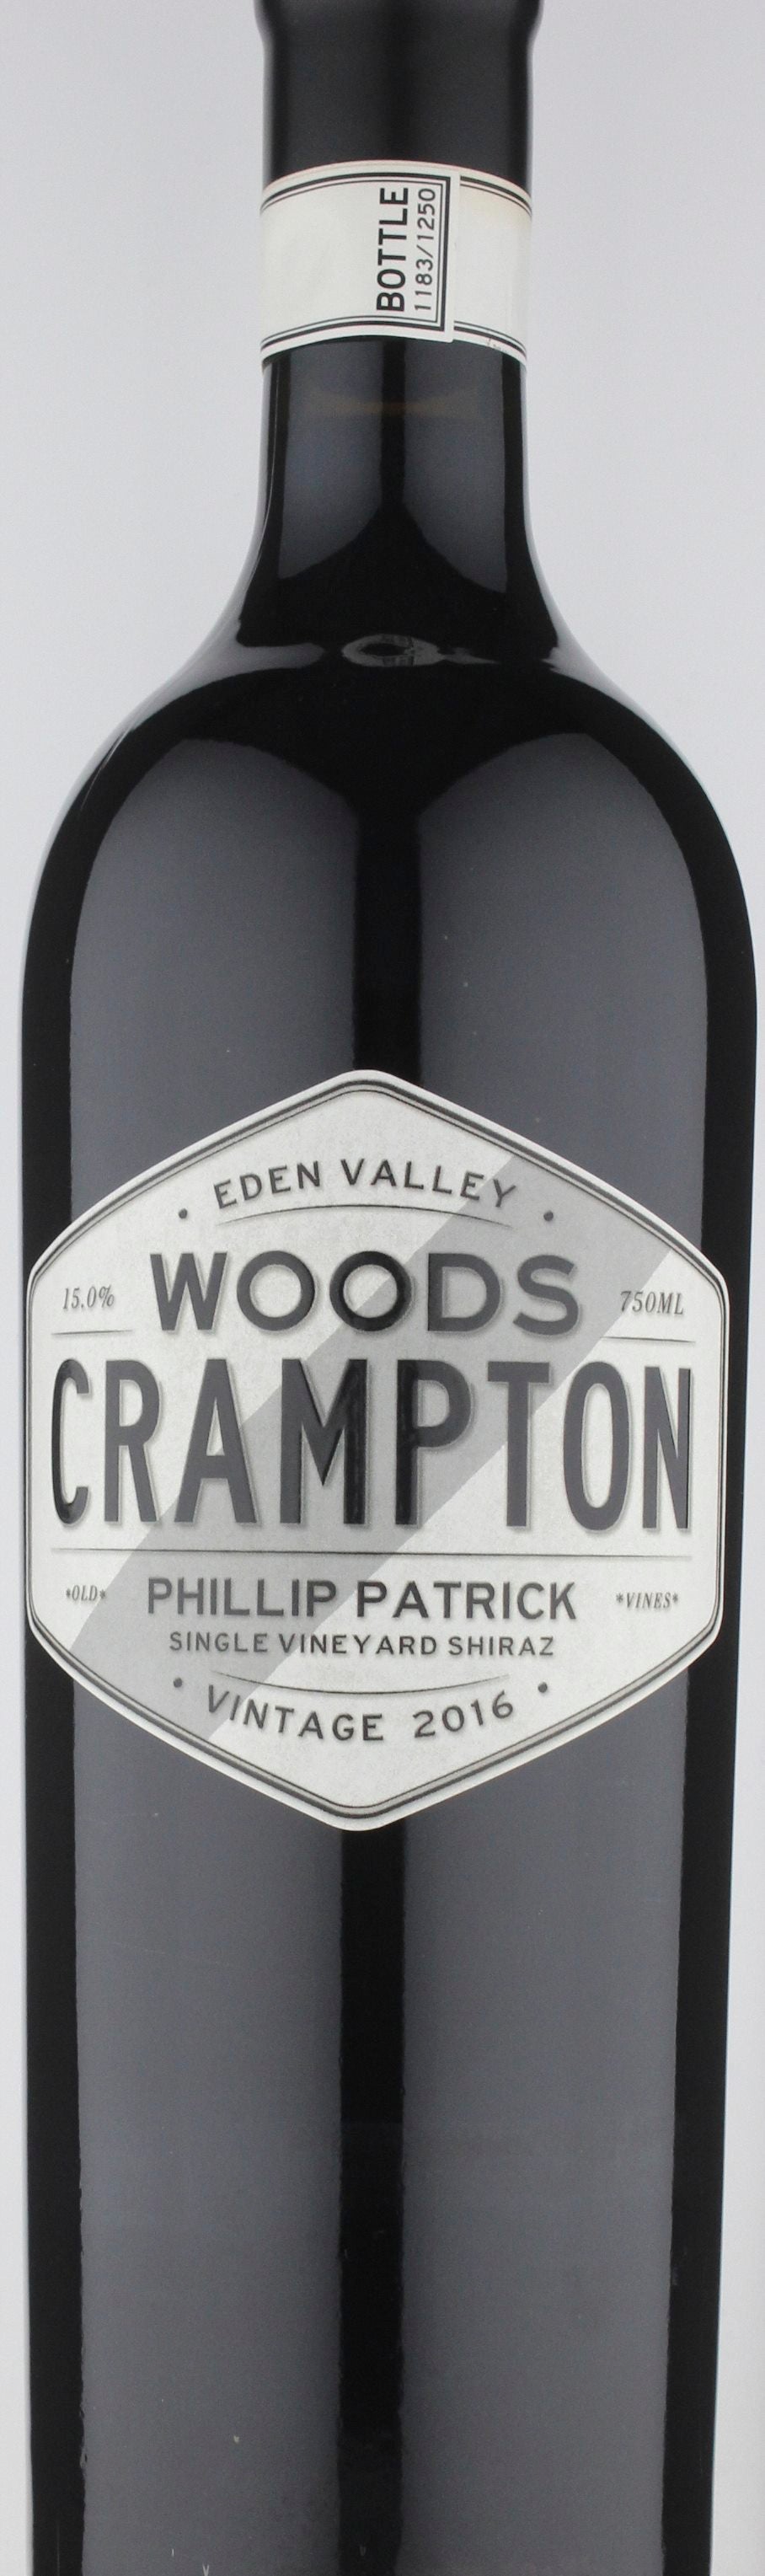 Woods Crampton Wines Phillip Patrick Single Vineyard Shiraz 2016